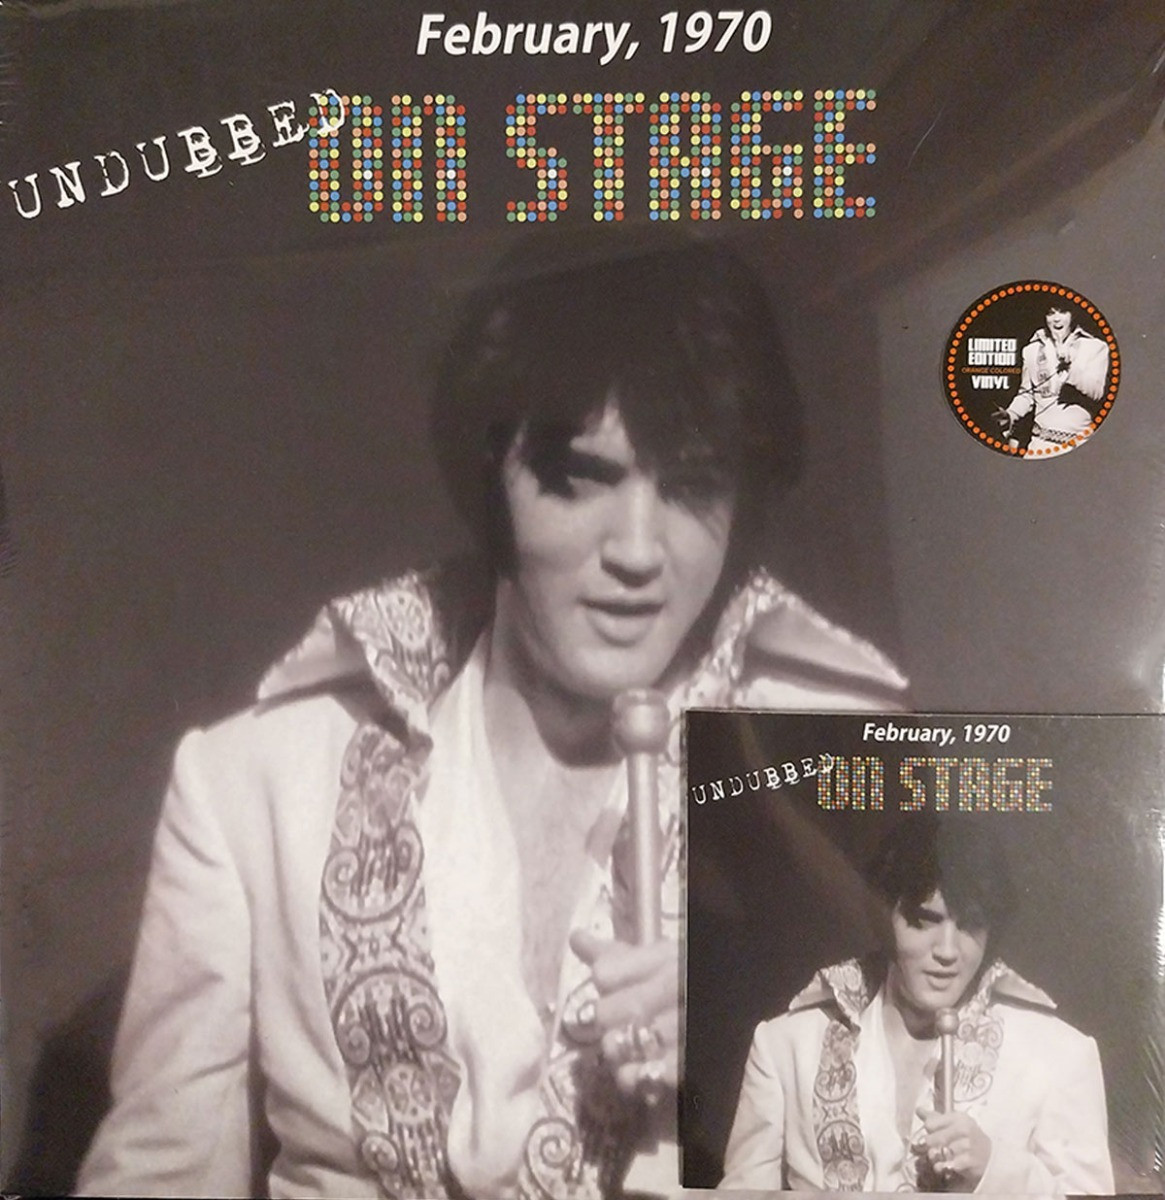 Elvis Presley - On Stage Undubbed LP + CD (Oranje Vinyl)